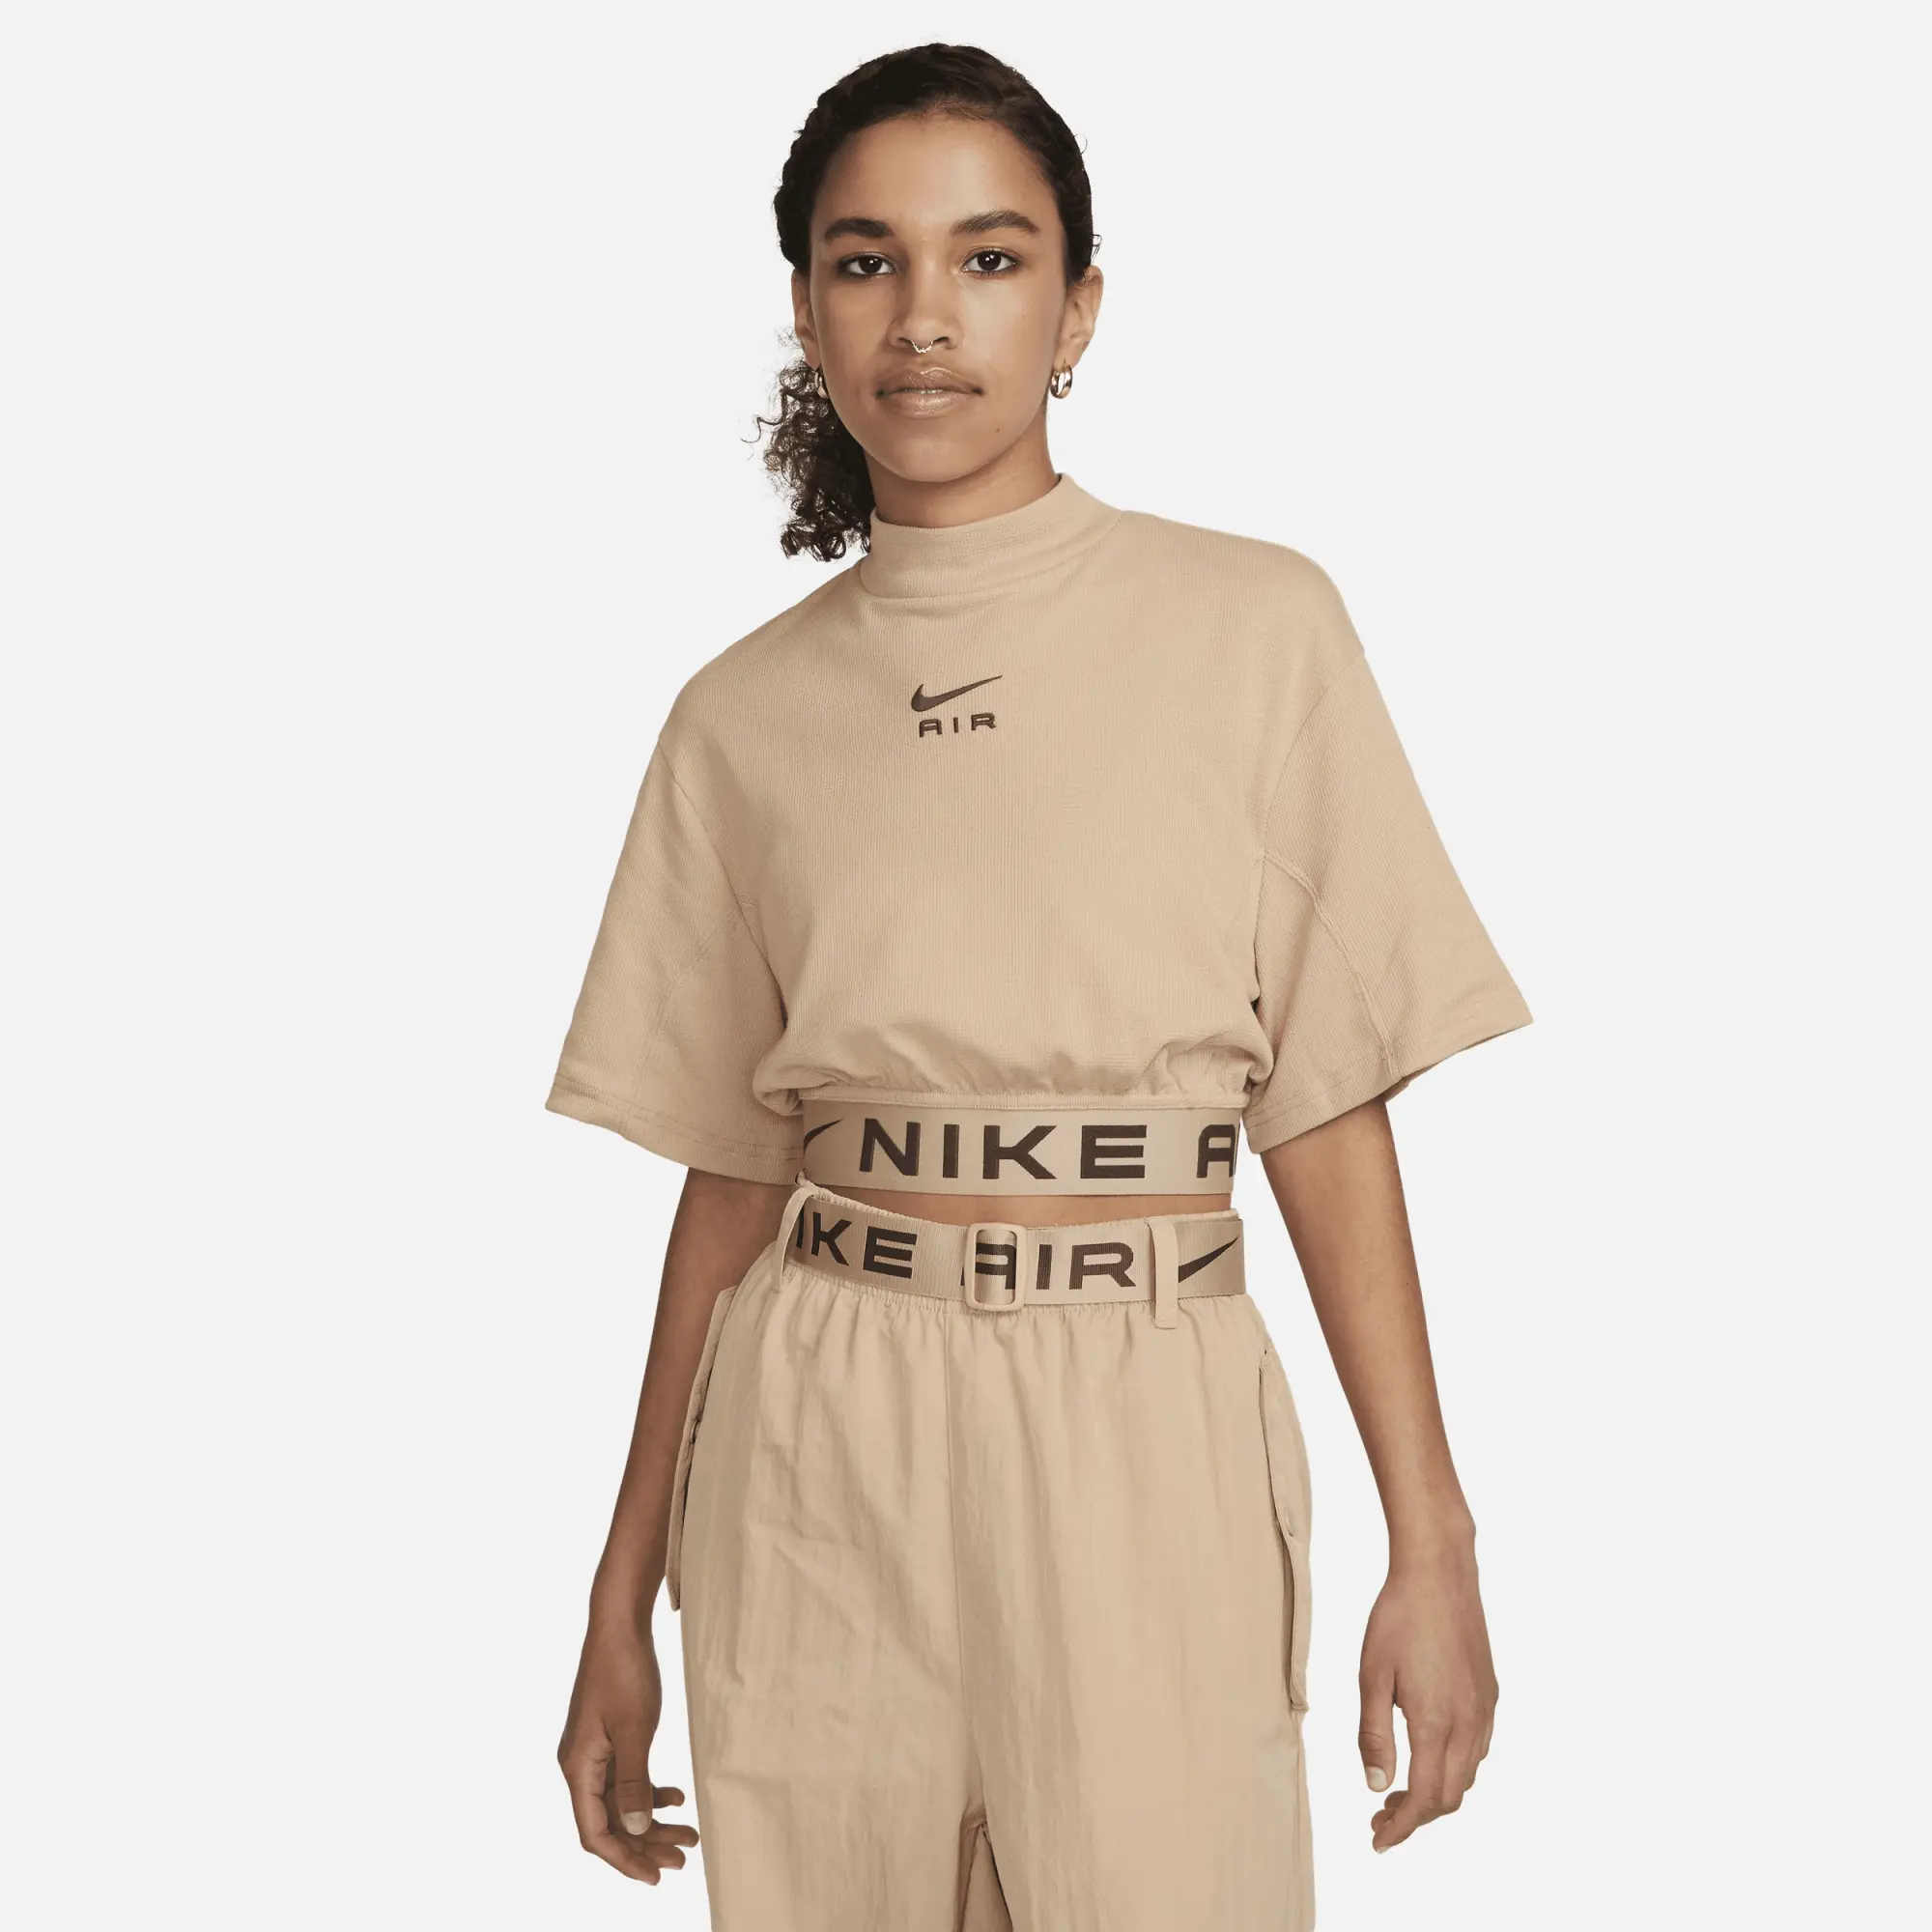 Nike Air Women's Short-Sleeve Cropped Top - Brown